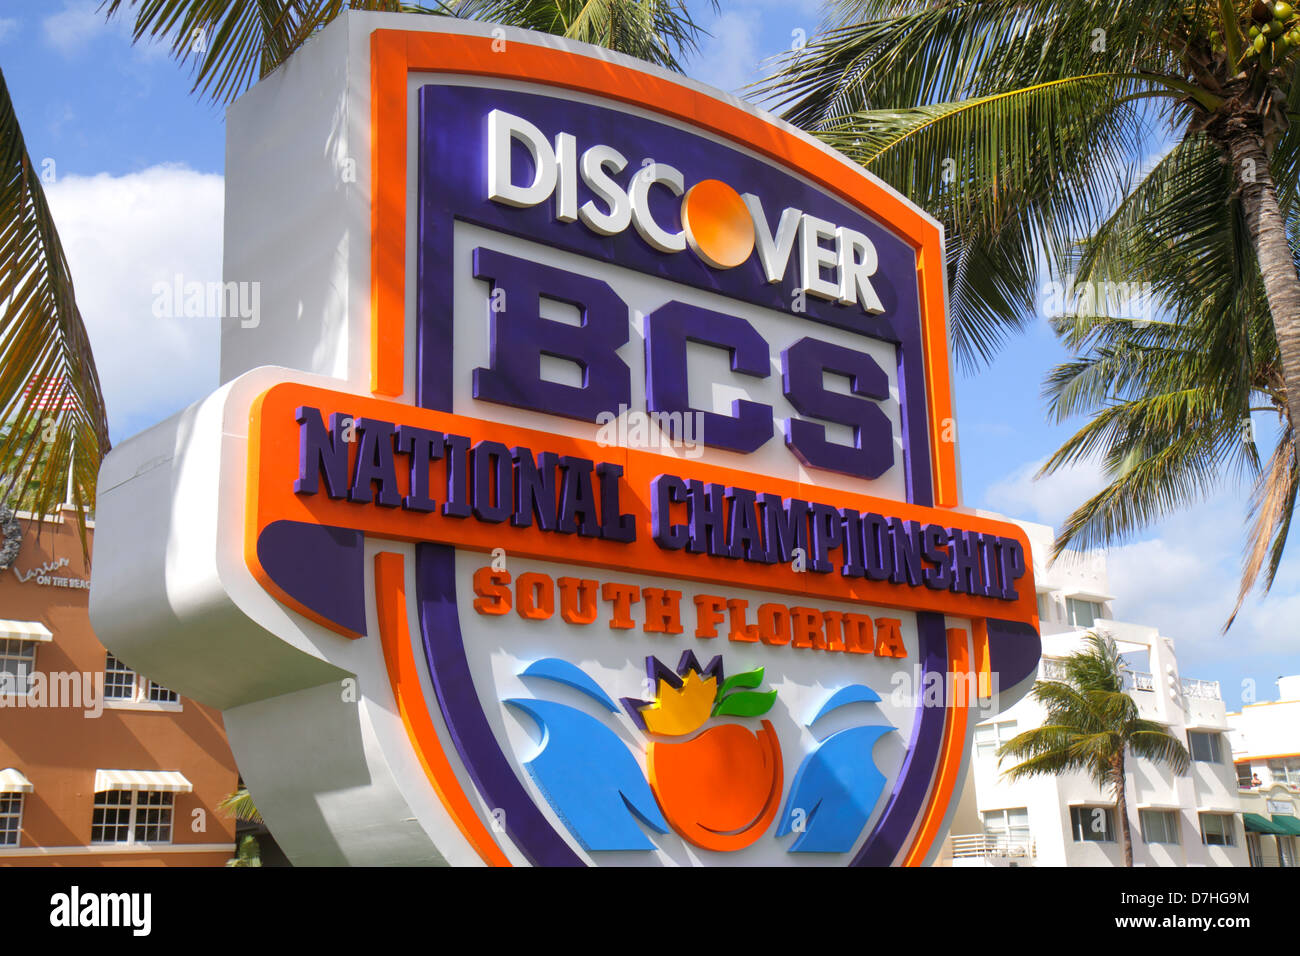 Miami Beach Florida,Lummus Park,Discover BCS National Championship,college football,sign,logo,FL121231137 Stock Photo